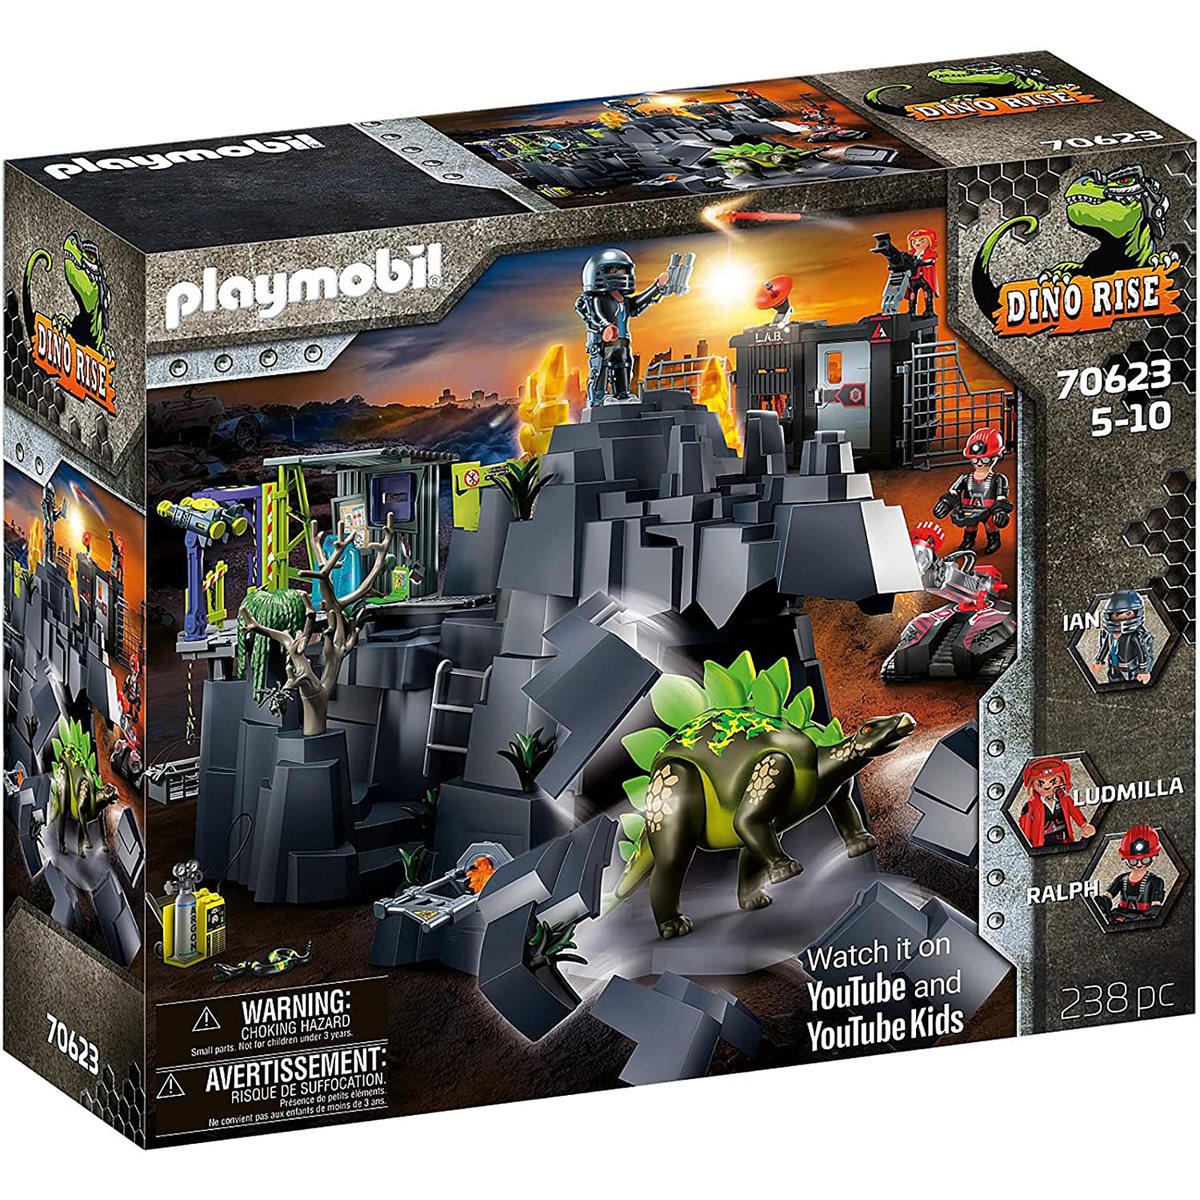 Playmobil Dragons - Entertainment Earth